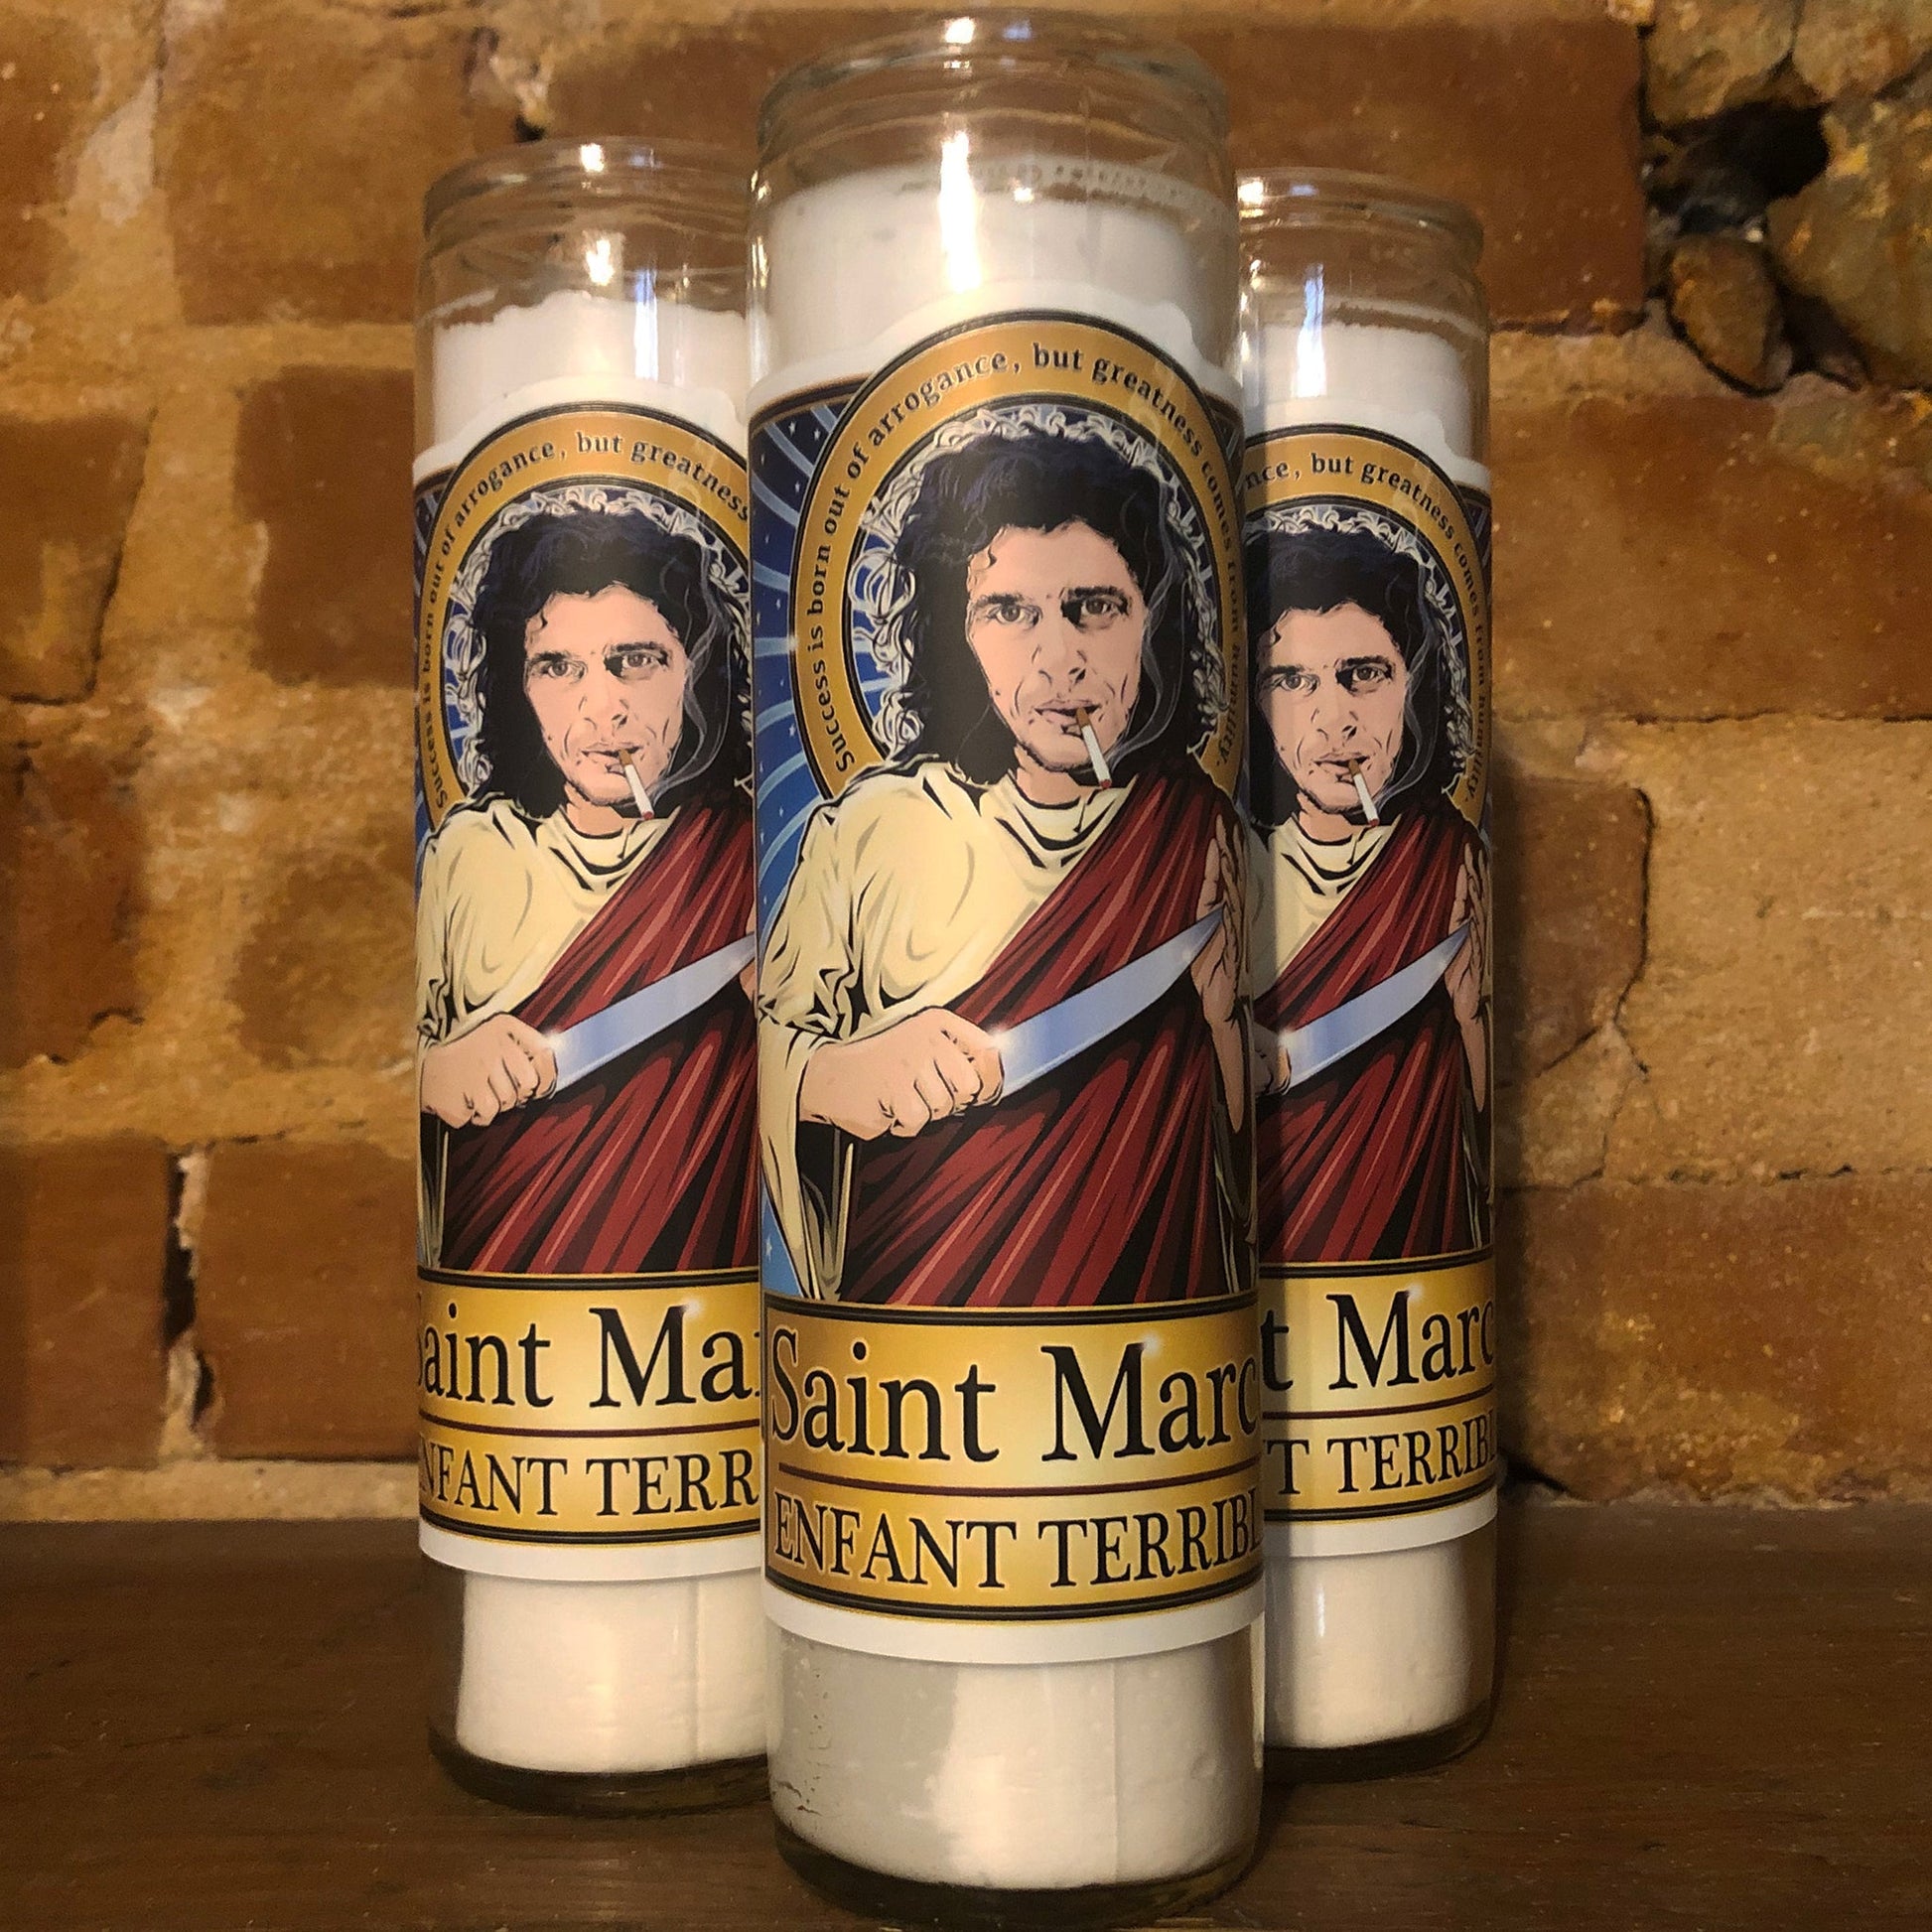 Saint Marco Enfant Terrible Candle Cleaverandblade.com